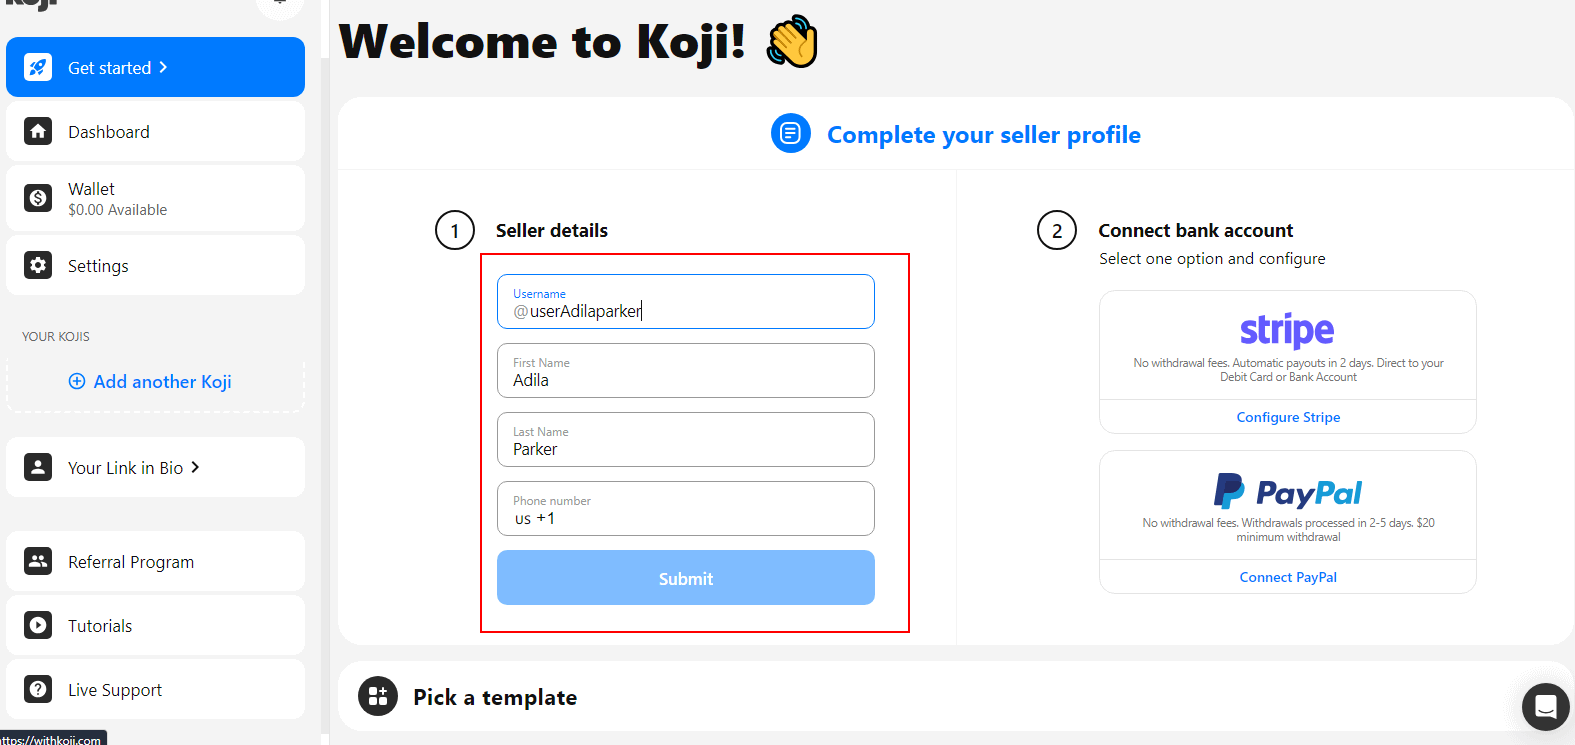 koji customize your profile